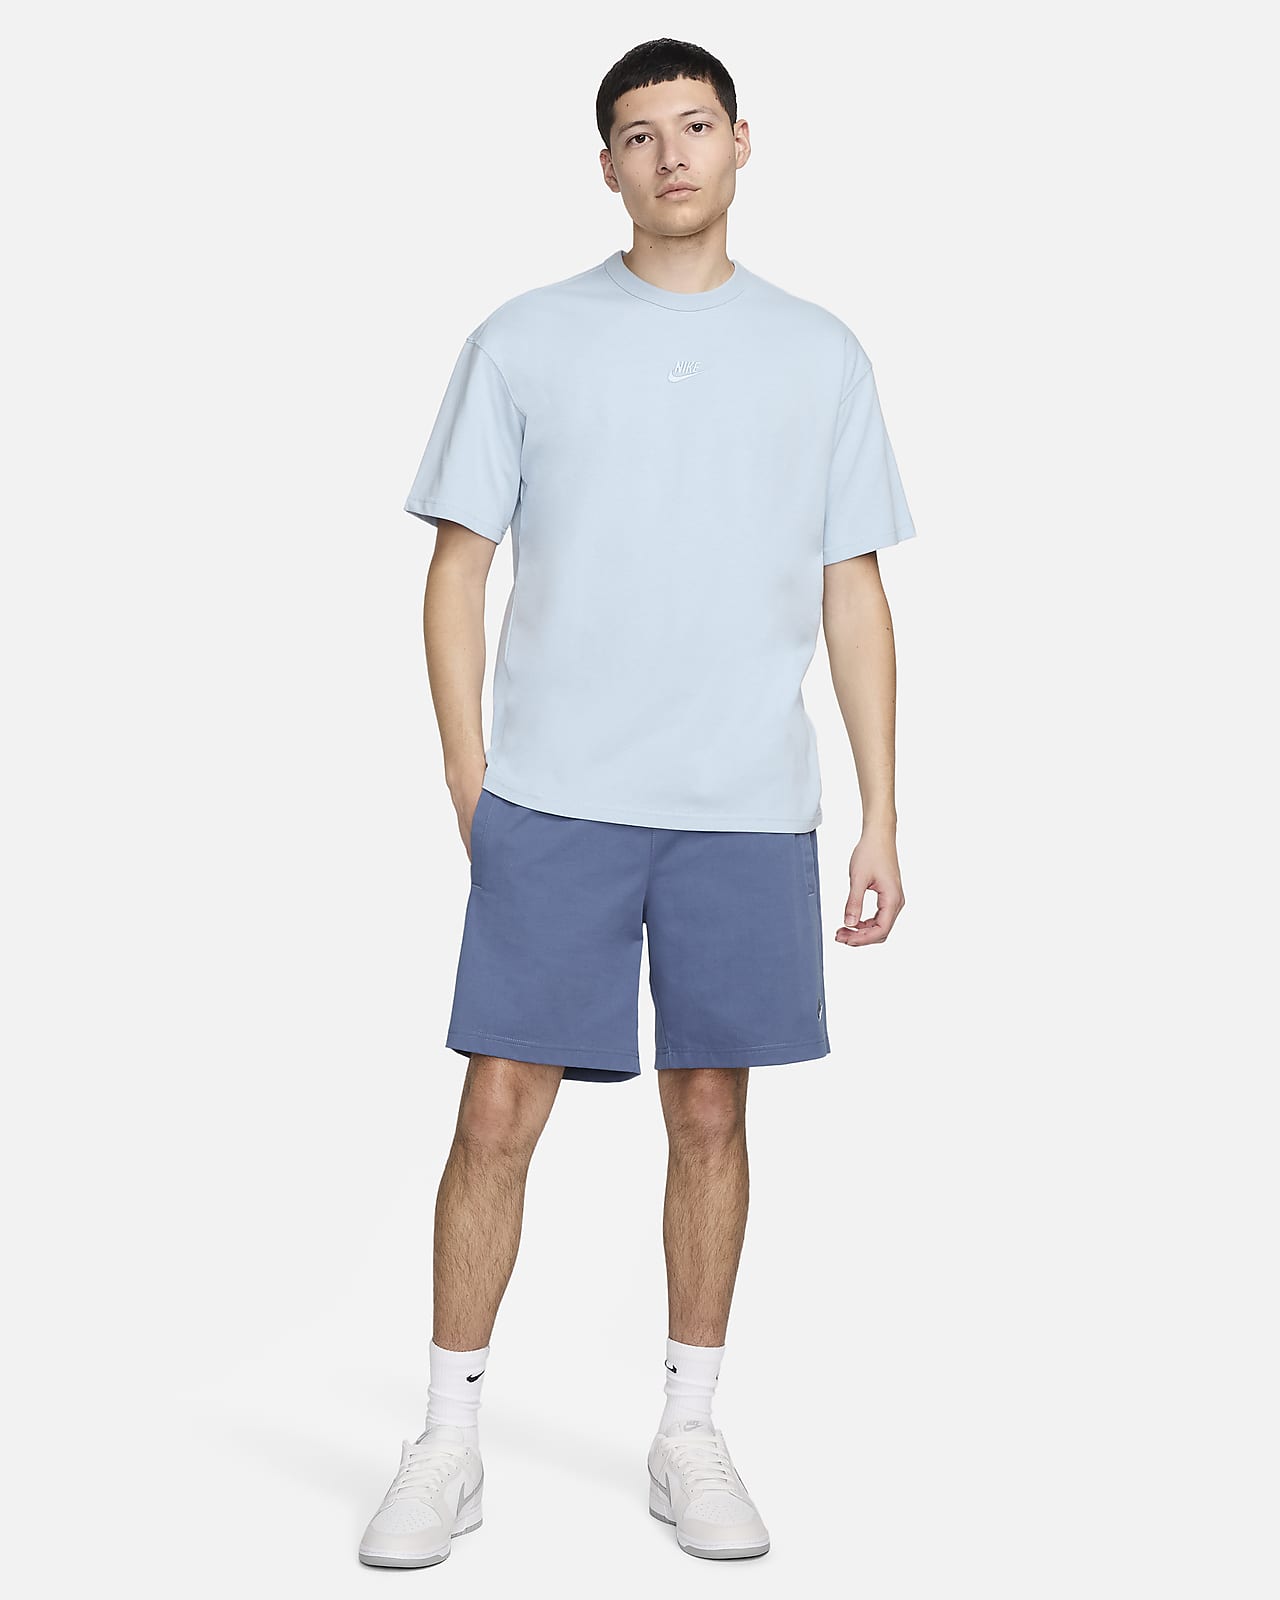 Nike NSW Premium Essential Tye Dye Blue T-Shirt - Puffer Reds